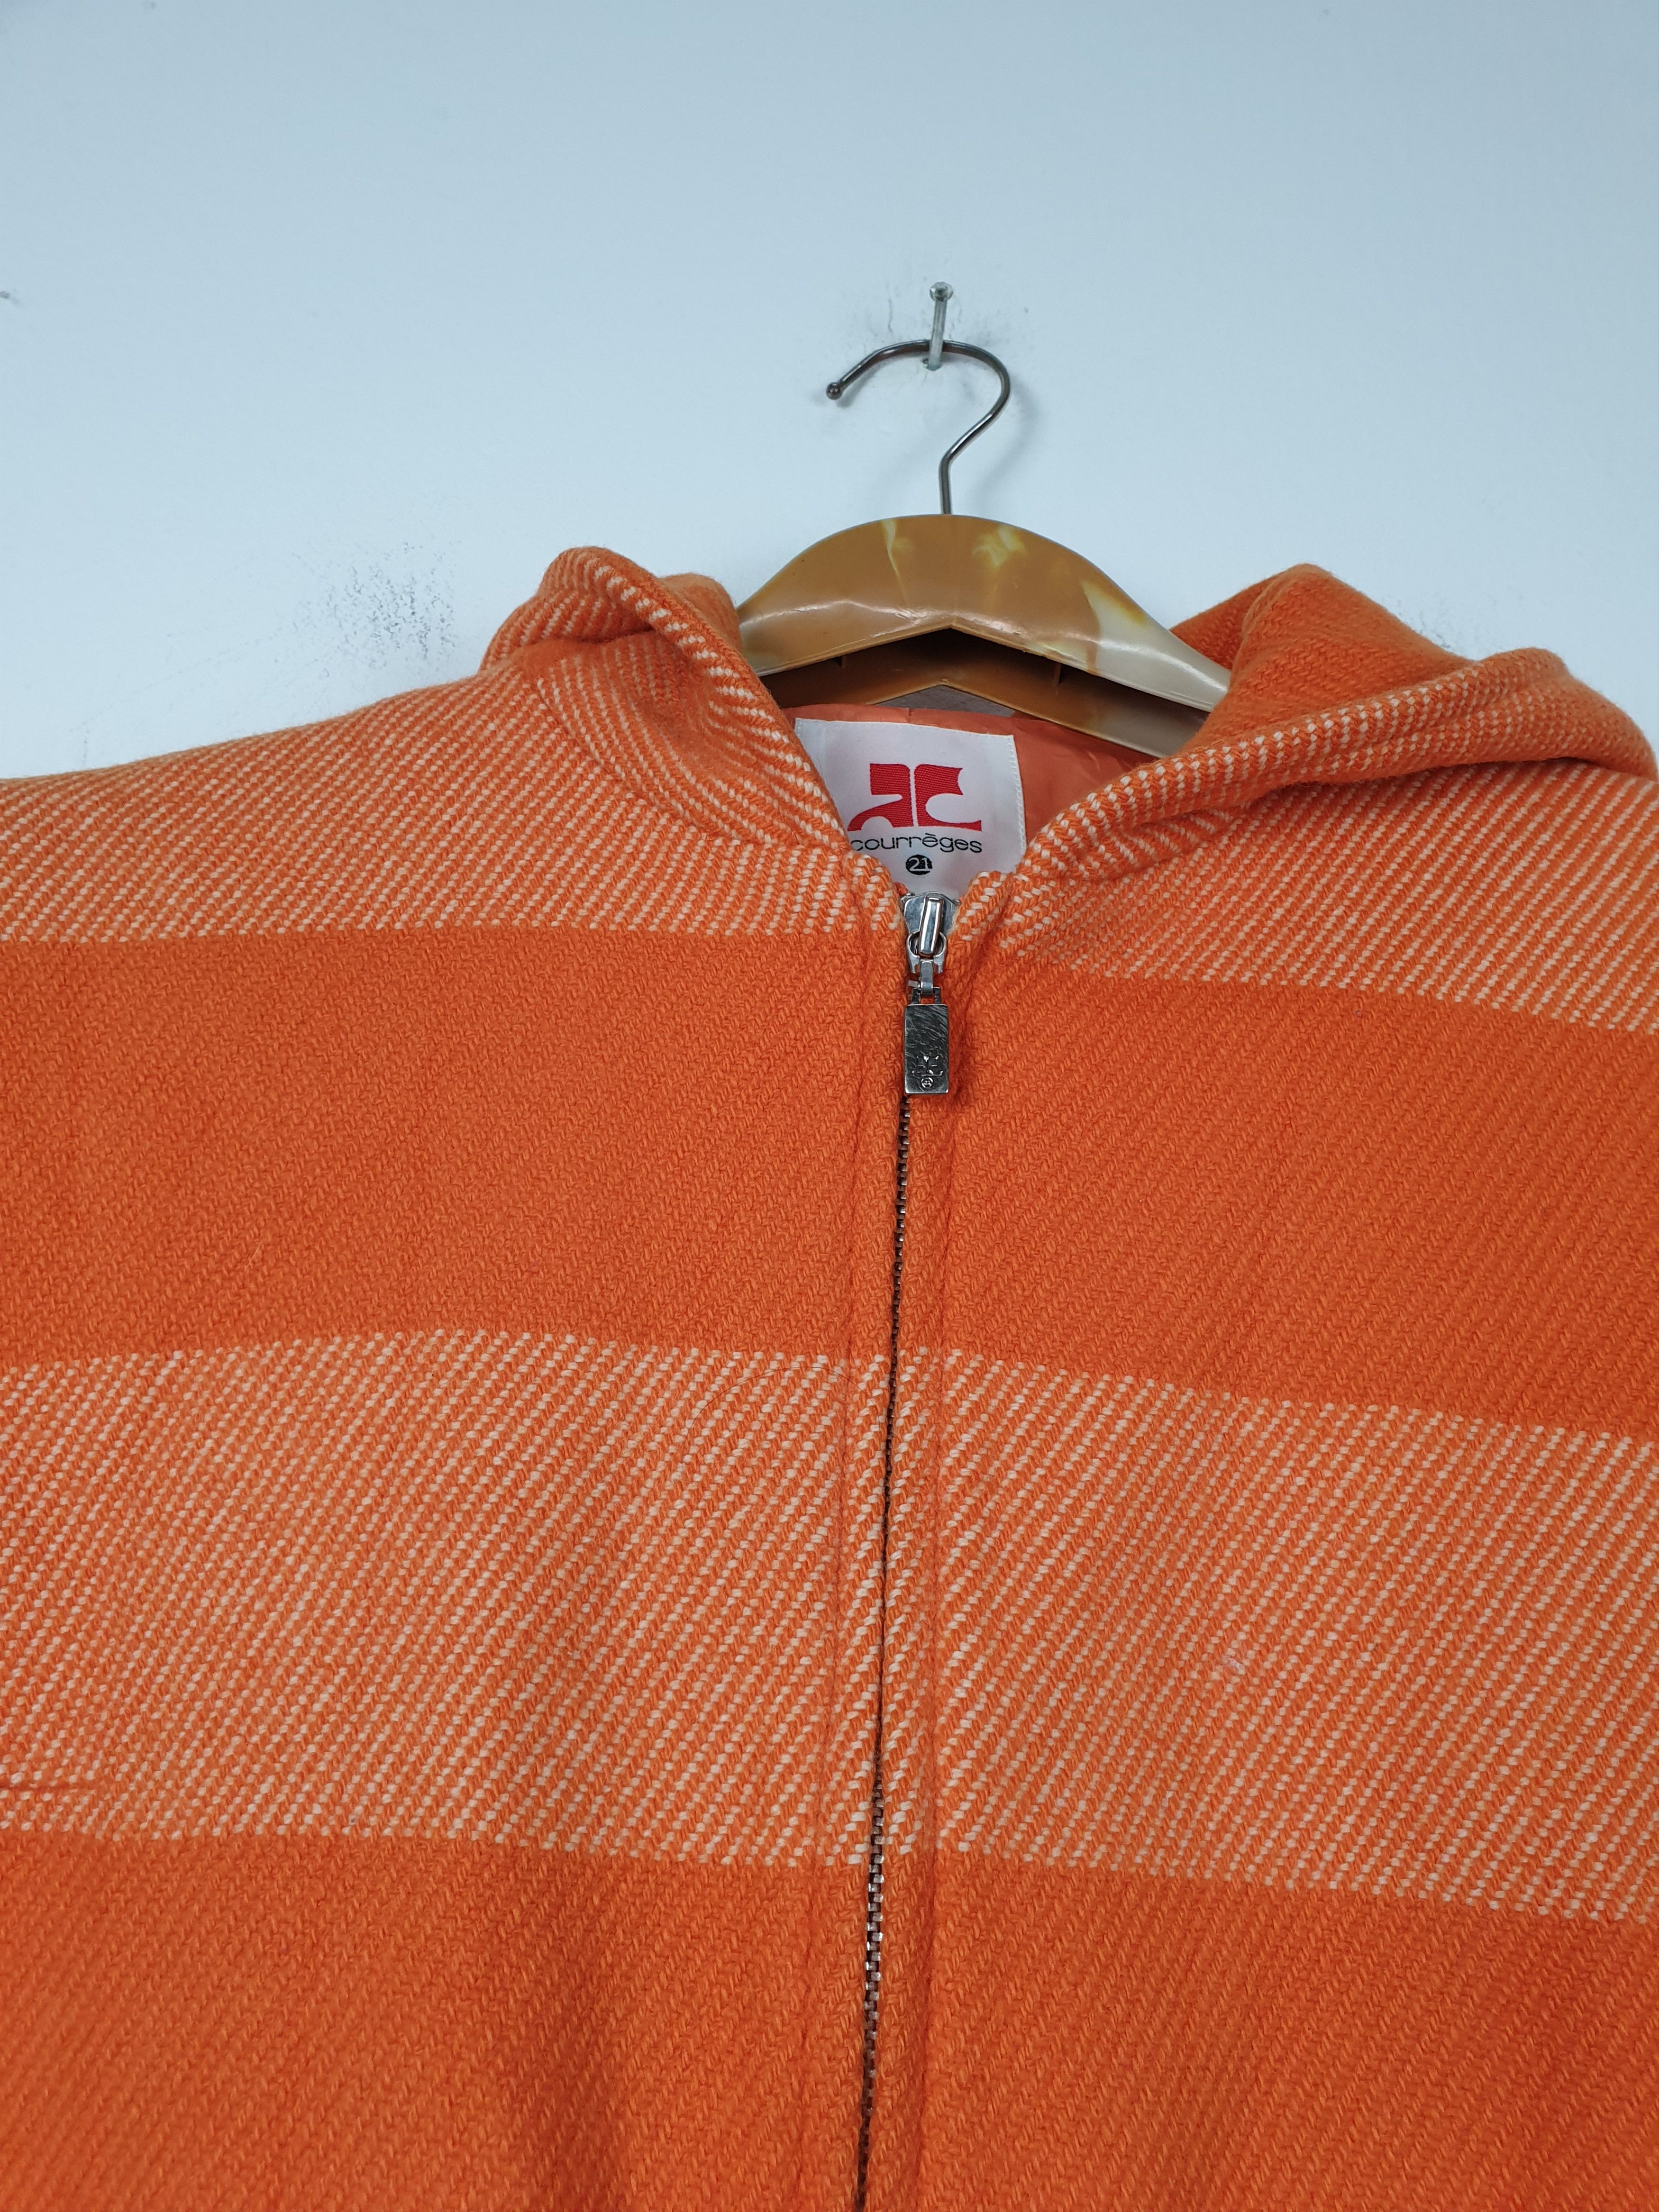 Vintage Vintage 90's COURREGES Wool Striped Hoodie Jacket Size US S / EU 44-46 / 1 - 8 Thumbnail